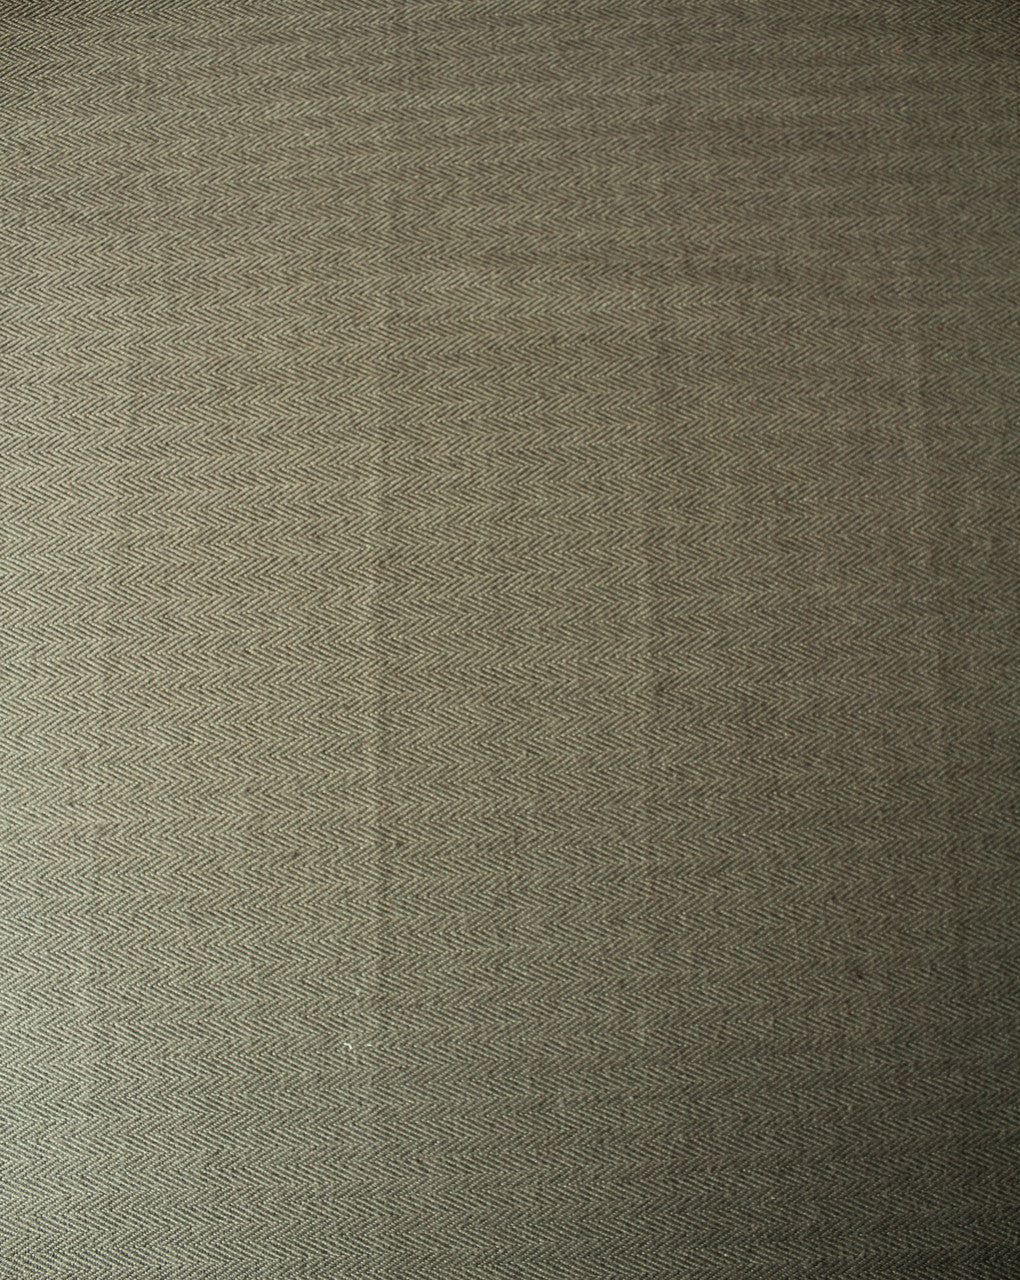 Black And Brown Herringbone Polyester Woolen Fabric